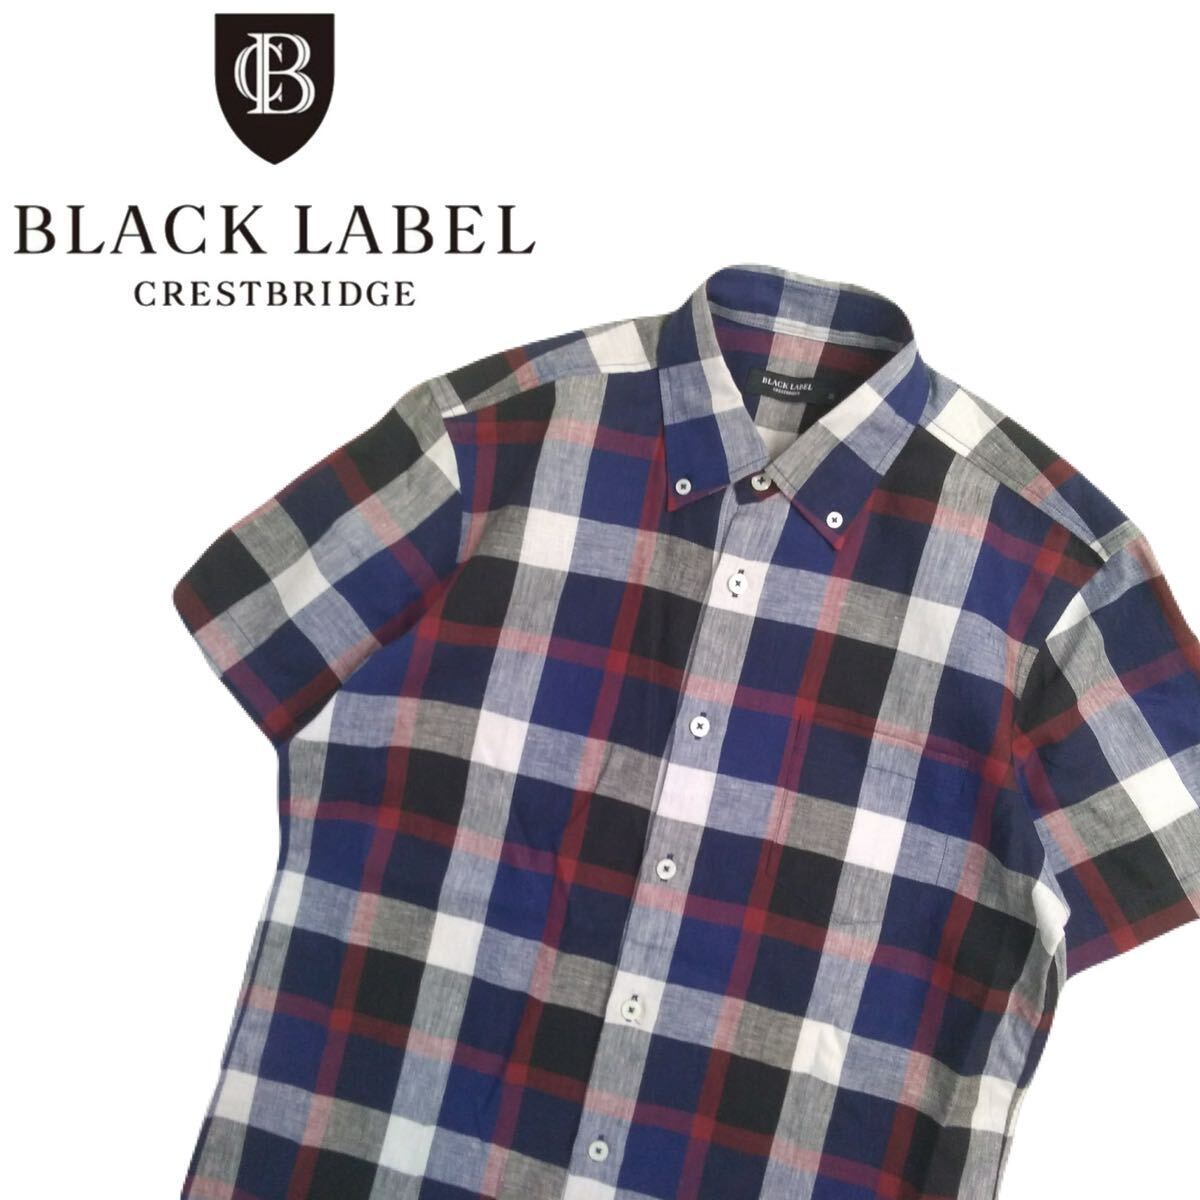  не использовался класс шедевр BLACK LABEL CRESTBRIDGEnoba проверка linen рубашка с коротким рукавом сорочка мужской M Black Label k rest Bridge 2405105